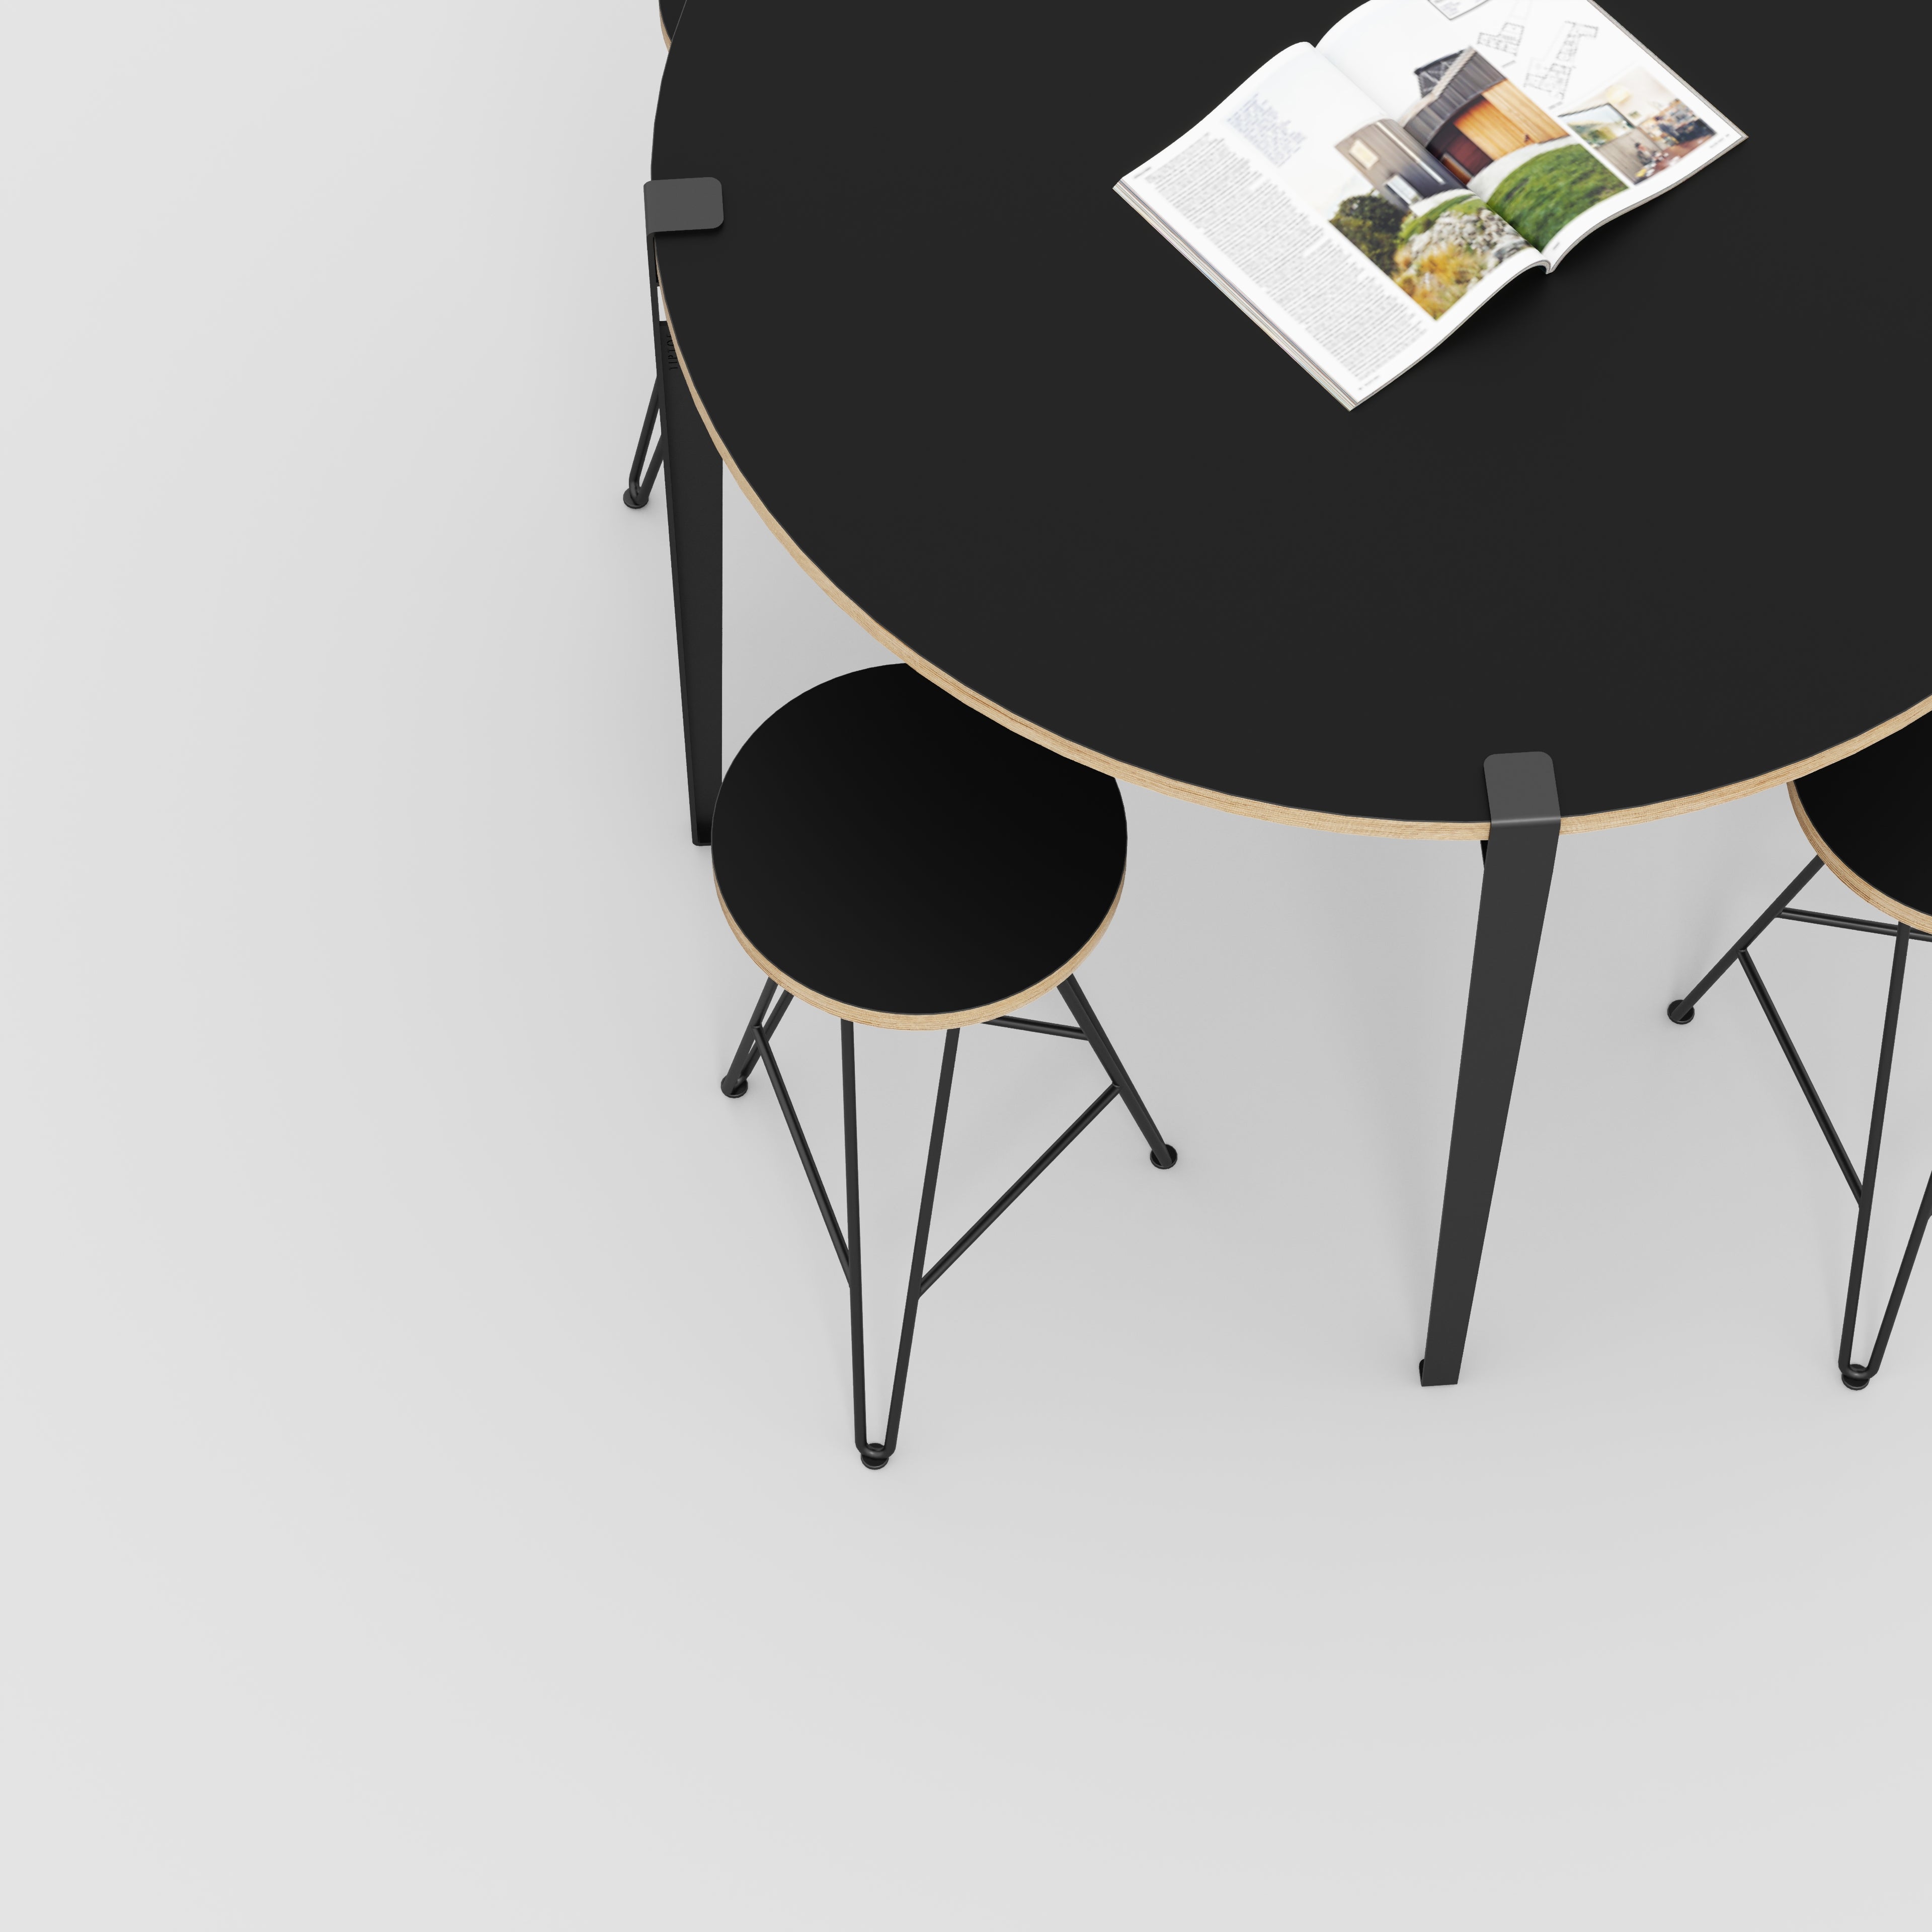 Round Table with Black Tiptoe Legs - Formica Diamond Black - 1200(dia) x 900(h)